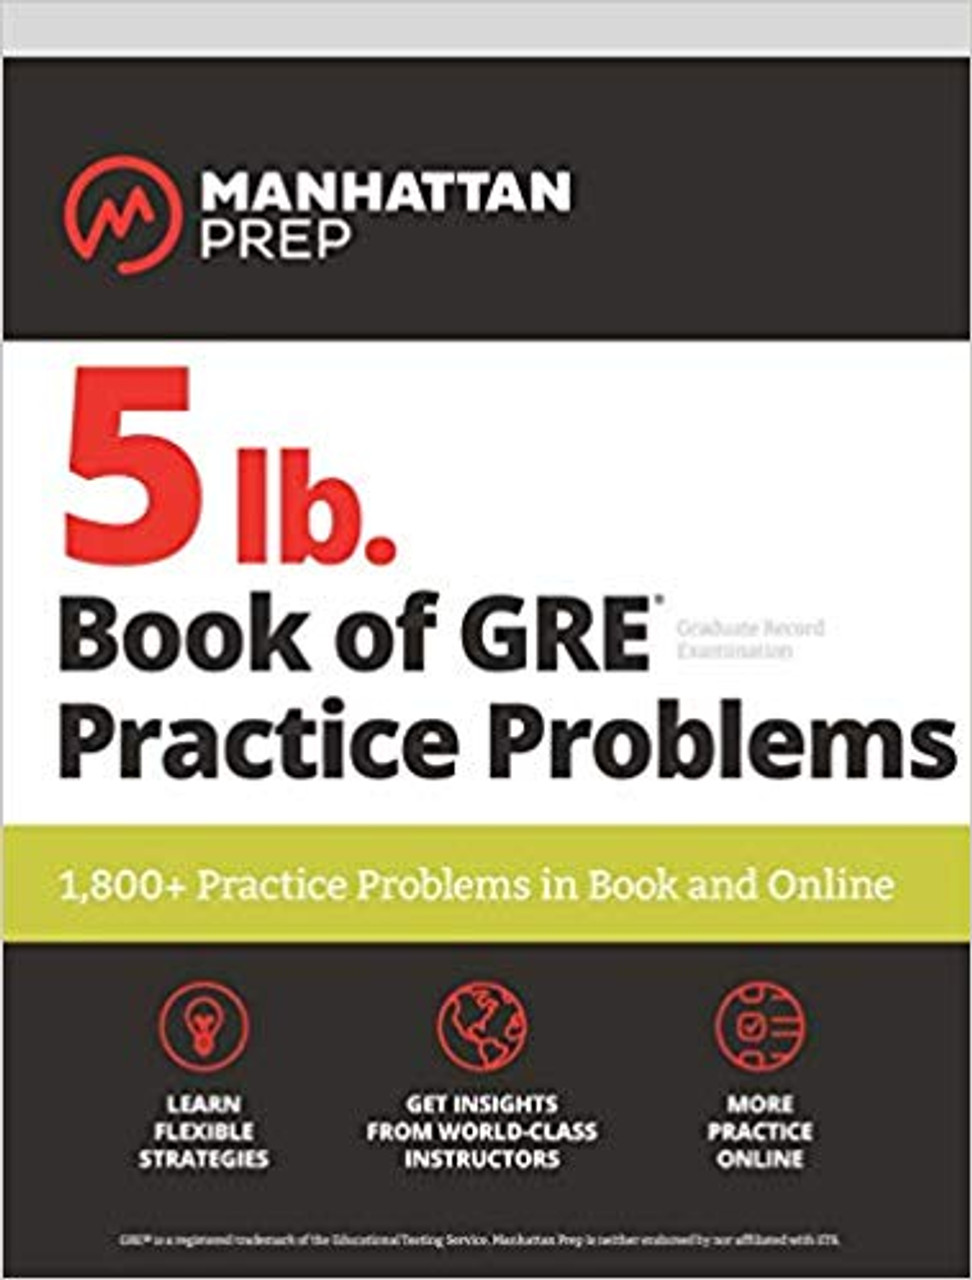 Practice　Book　GRE　Problems　in　Prep　of　5-lb.　Manhattan　Bulk